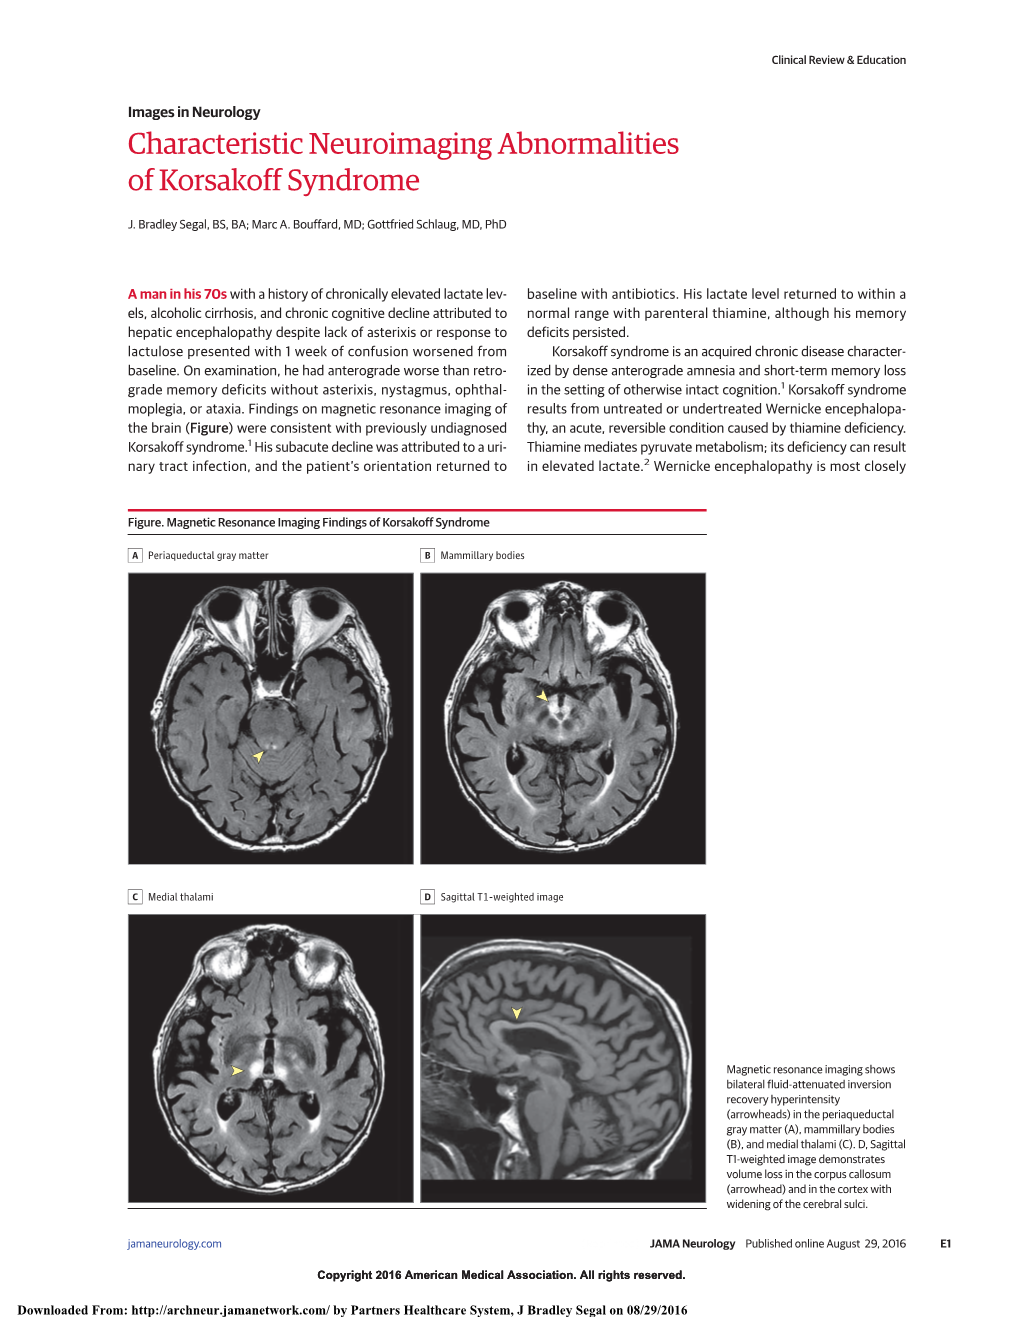 Characteristic Neuroimaging Abnormalities of Korsakoff Syndrome